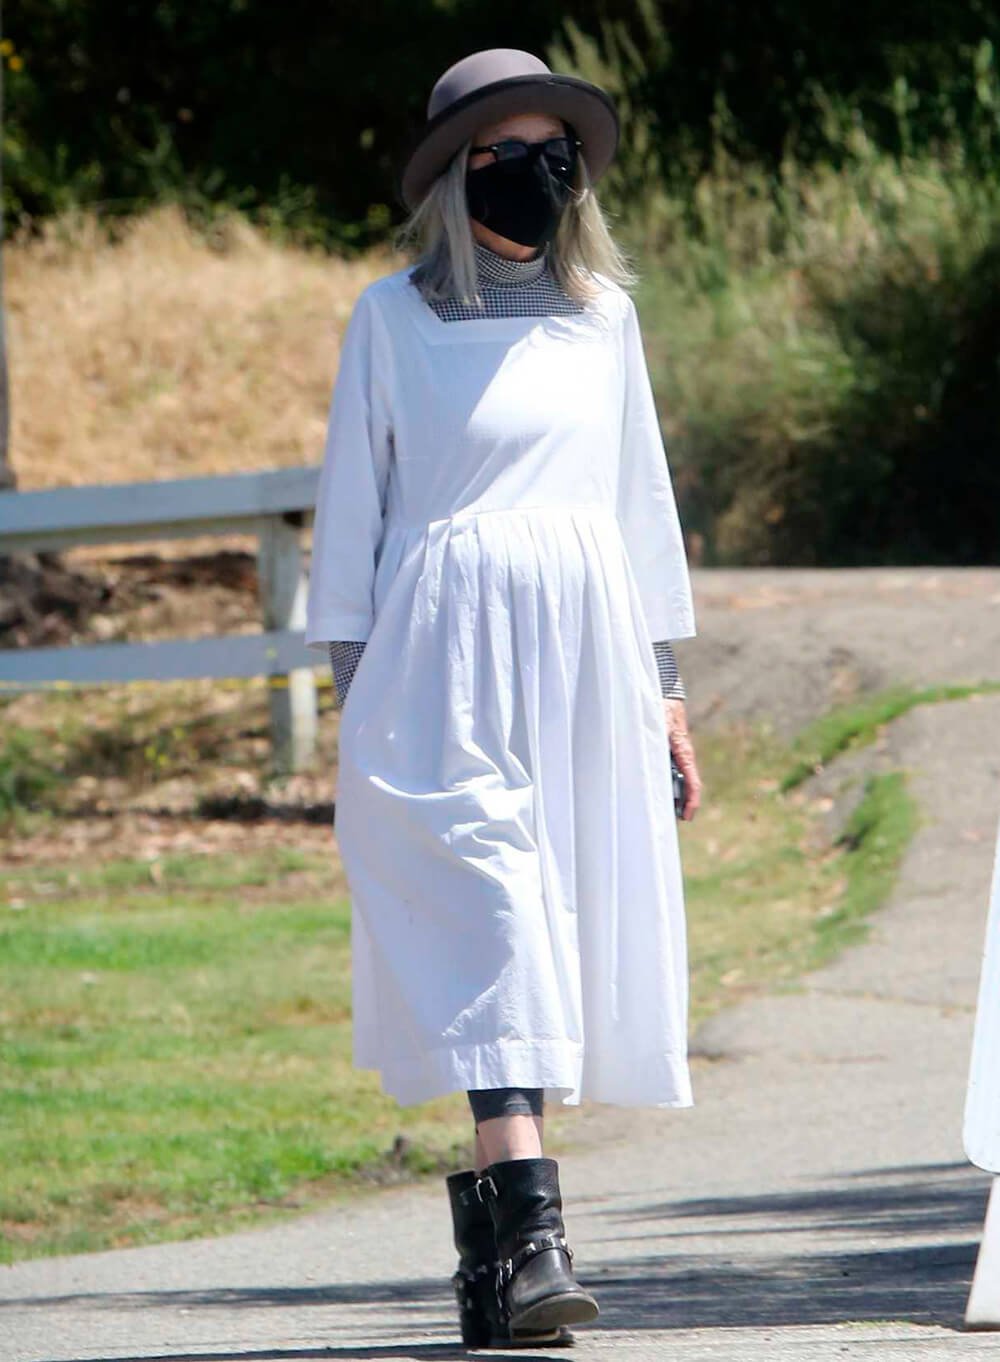 It girls - Diane Keaton, vestido branco, breezy dress, sobreposição - Diane Keaton - Verão - Street Style  - https://stealthelook.com.br